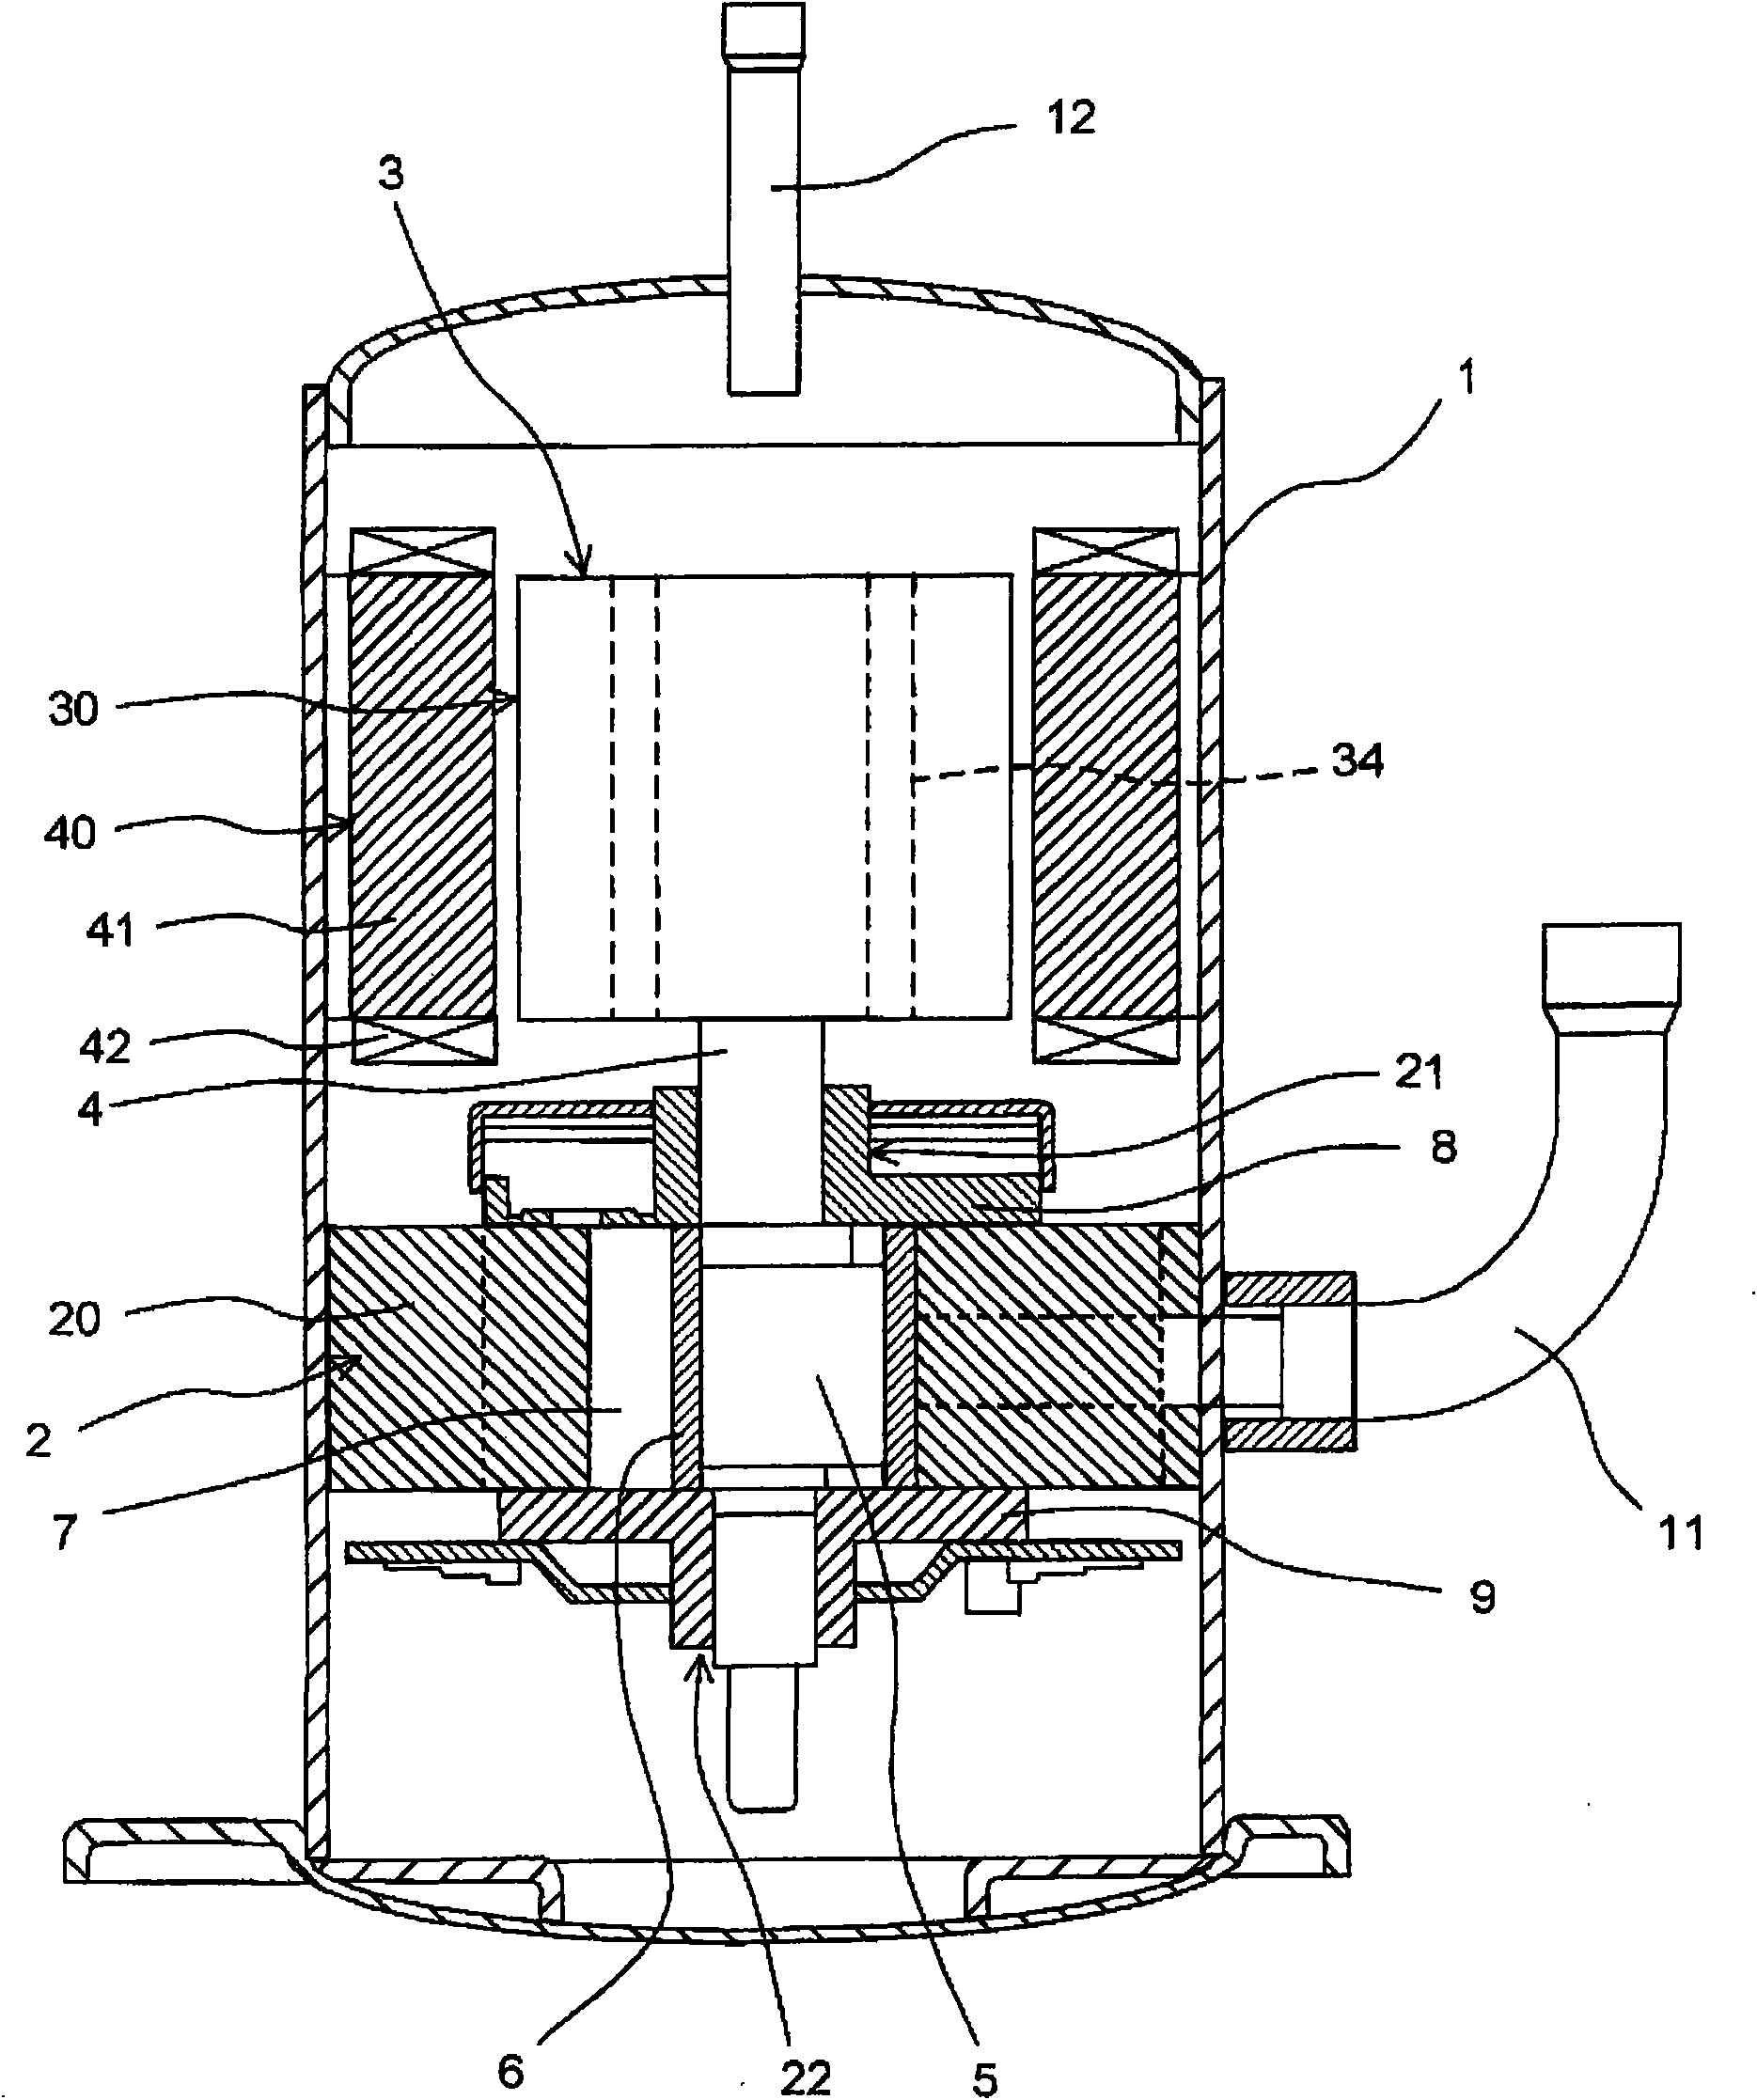 Motor, and compressor